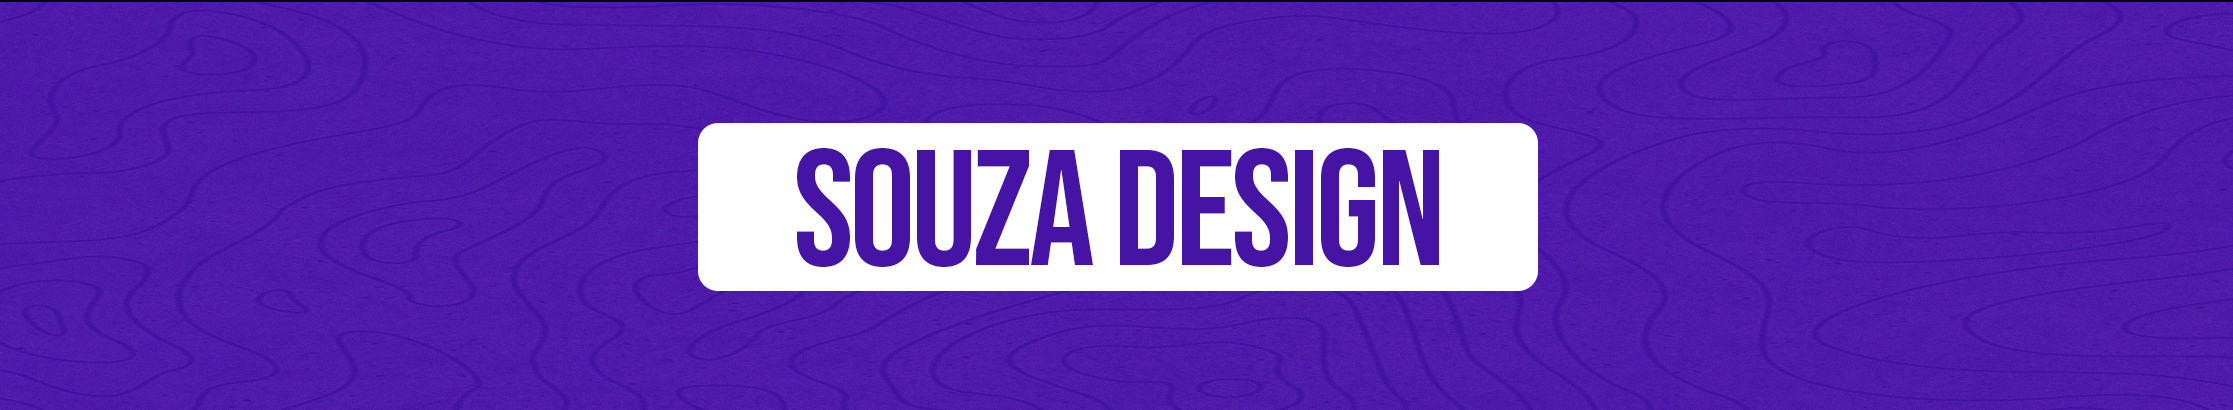 Souza Design のプロファイルバナー